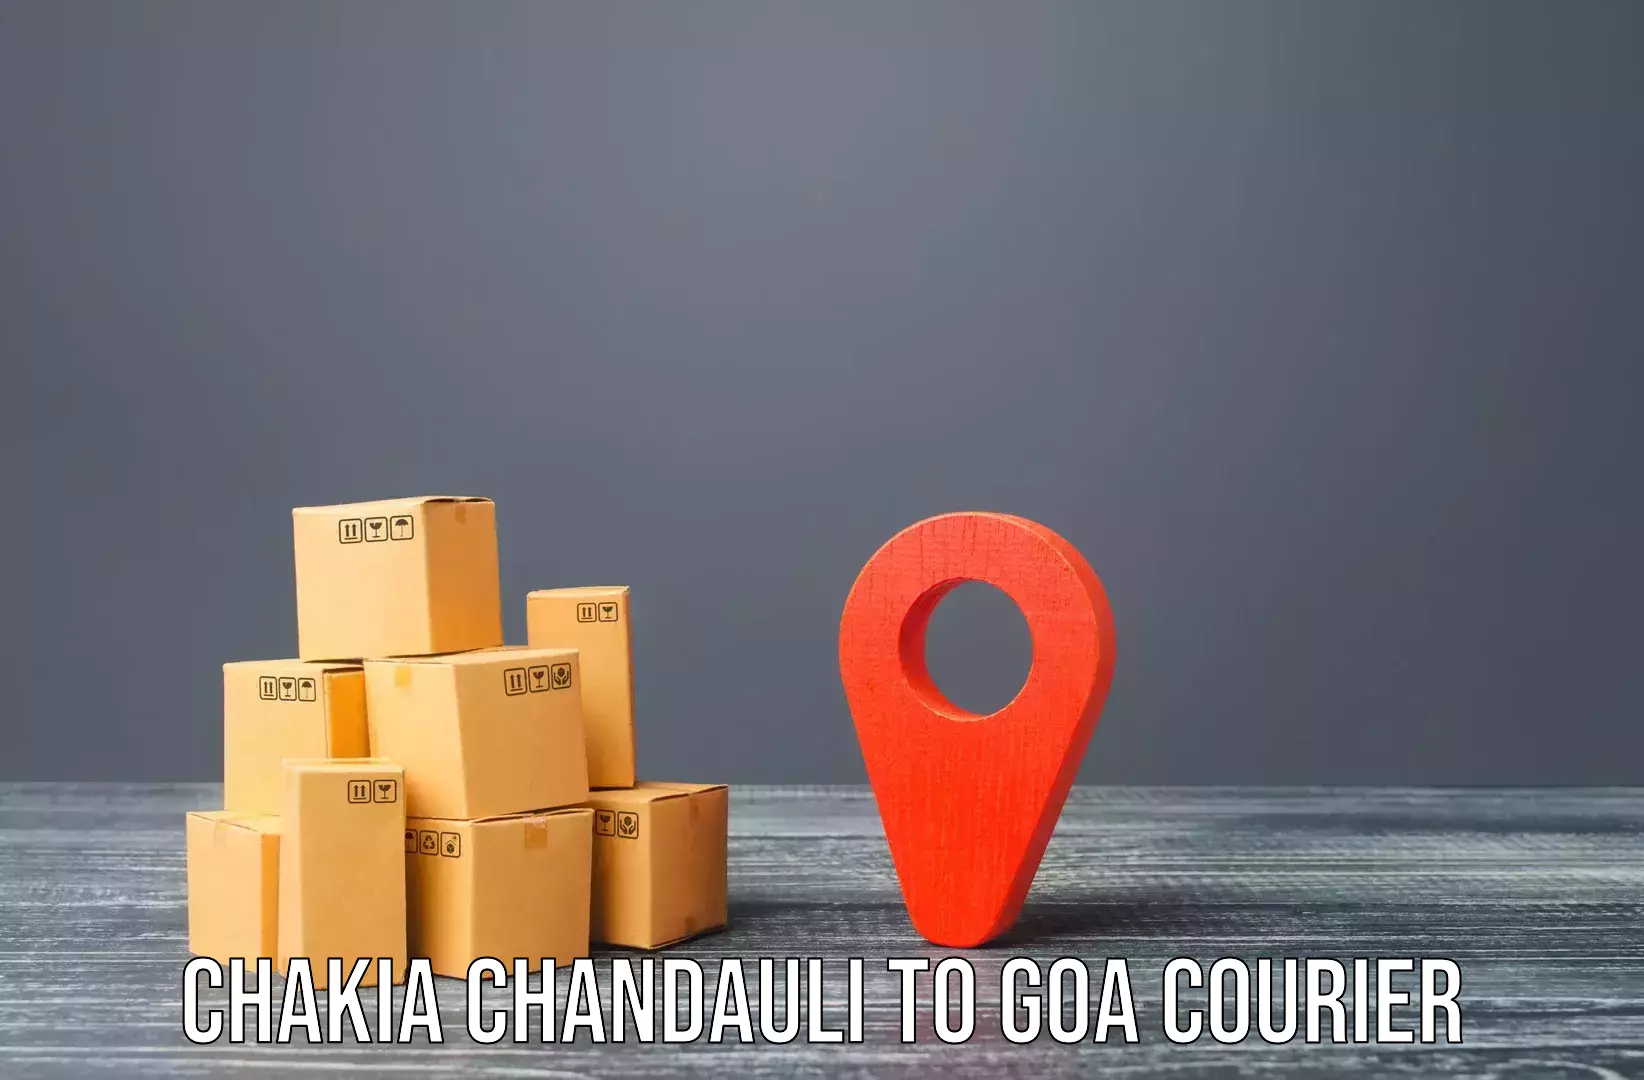 Specialized moving company Chakia Chandauli to South Goa